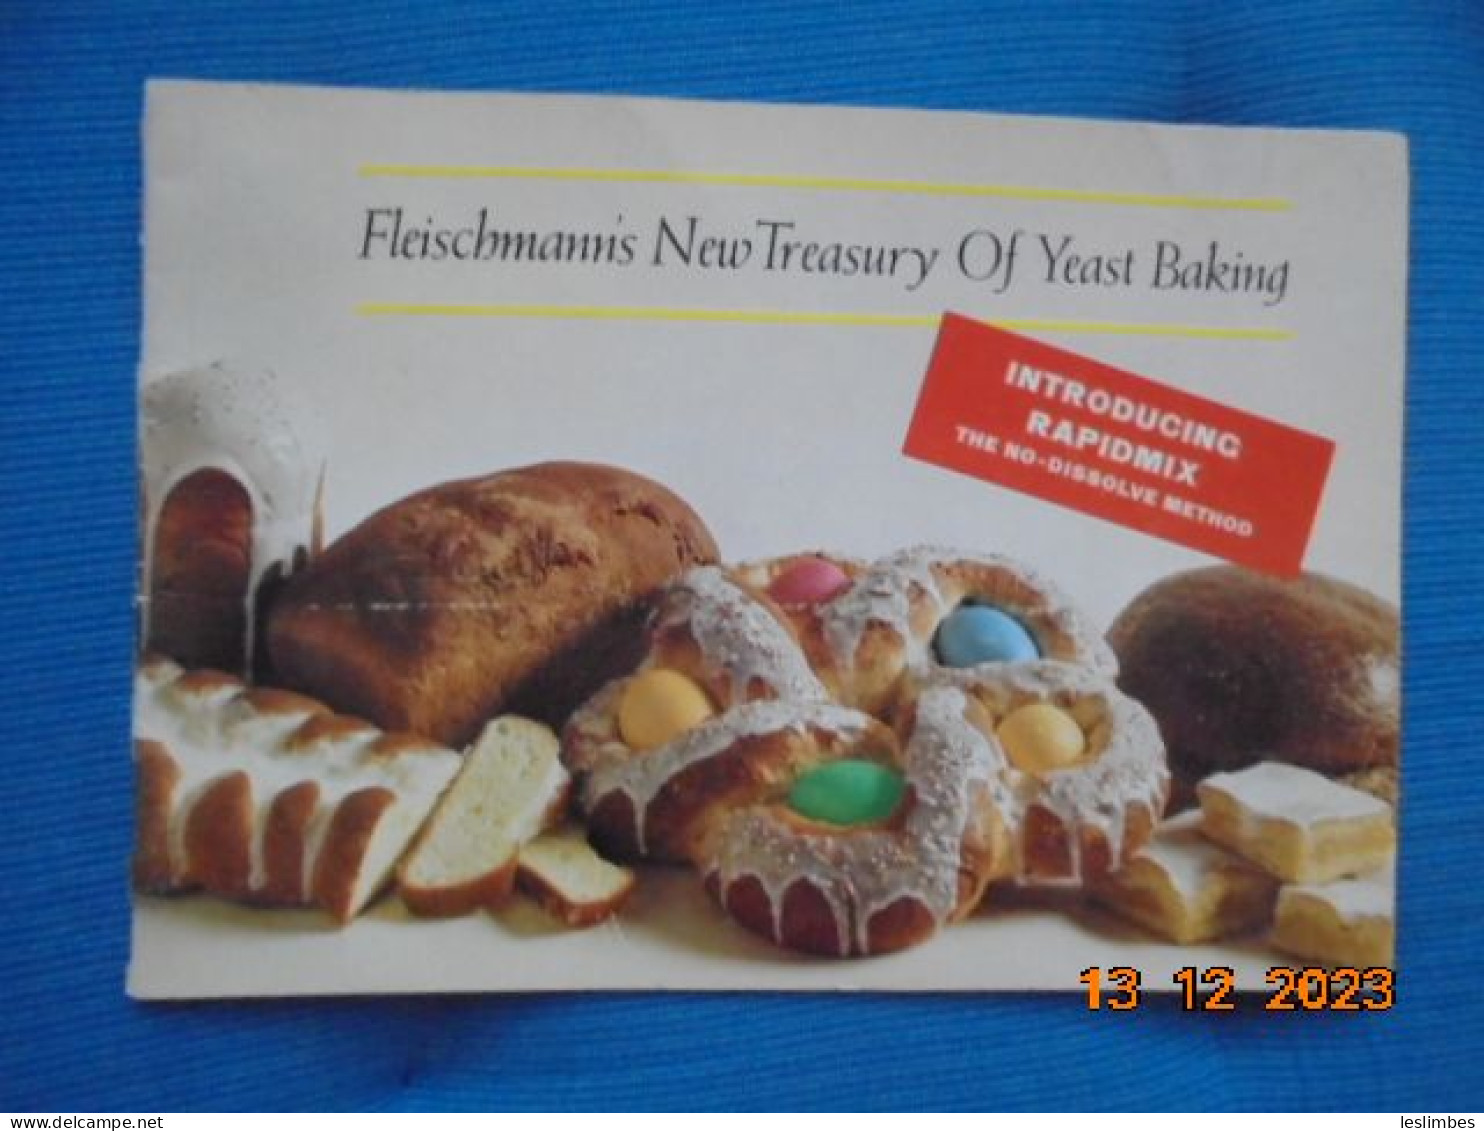 Fleischmann's New Treasury Of Yeast Baking : Introducing Rapidmix The No-Dissolve Method 1968 - Americana